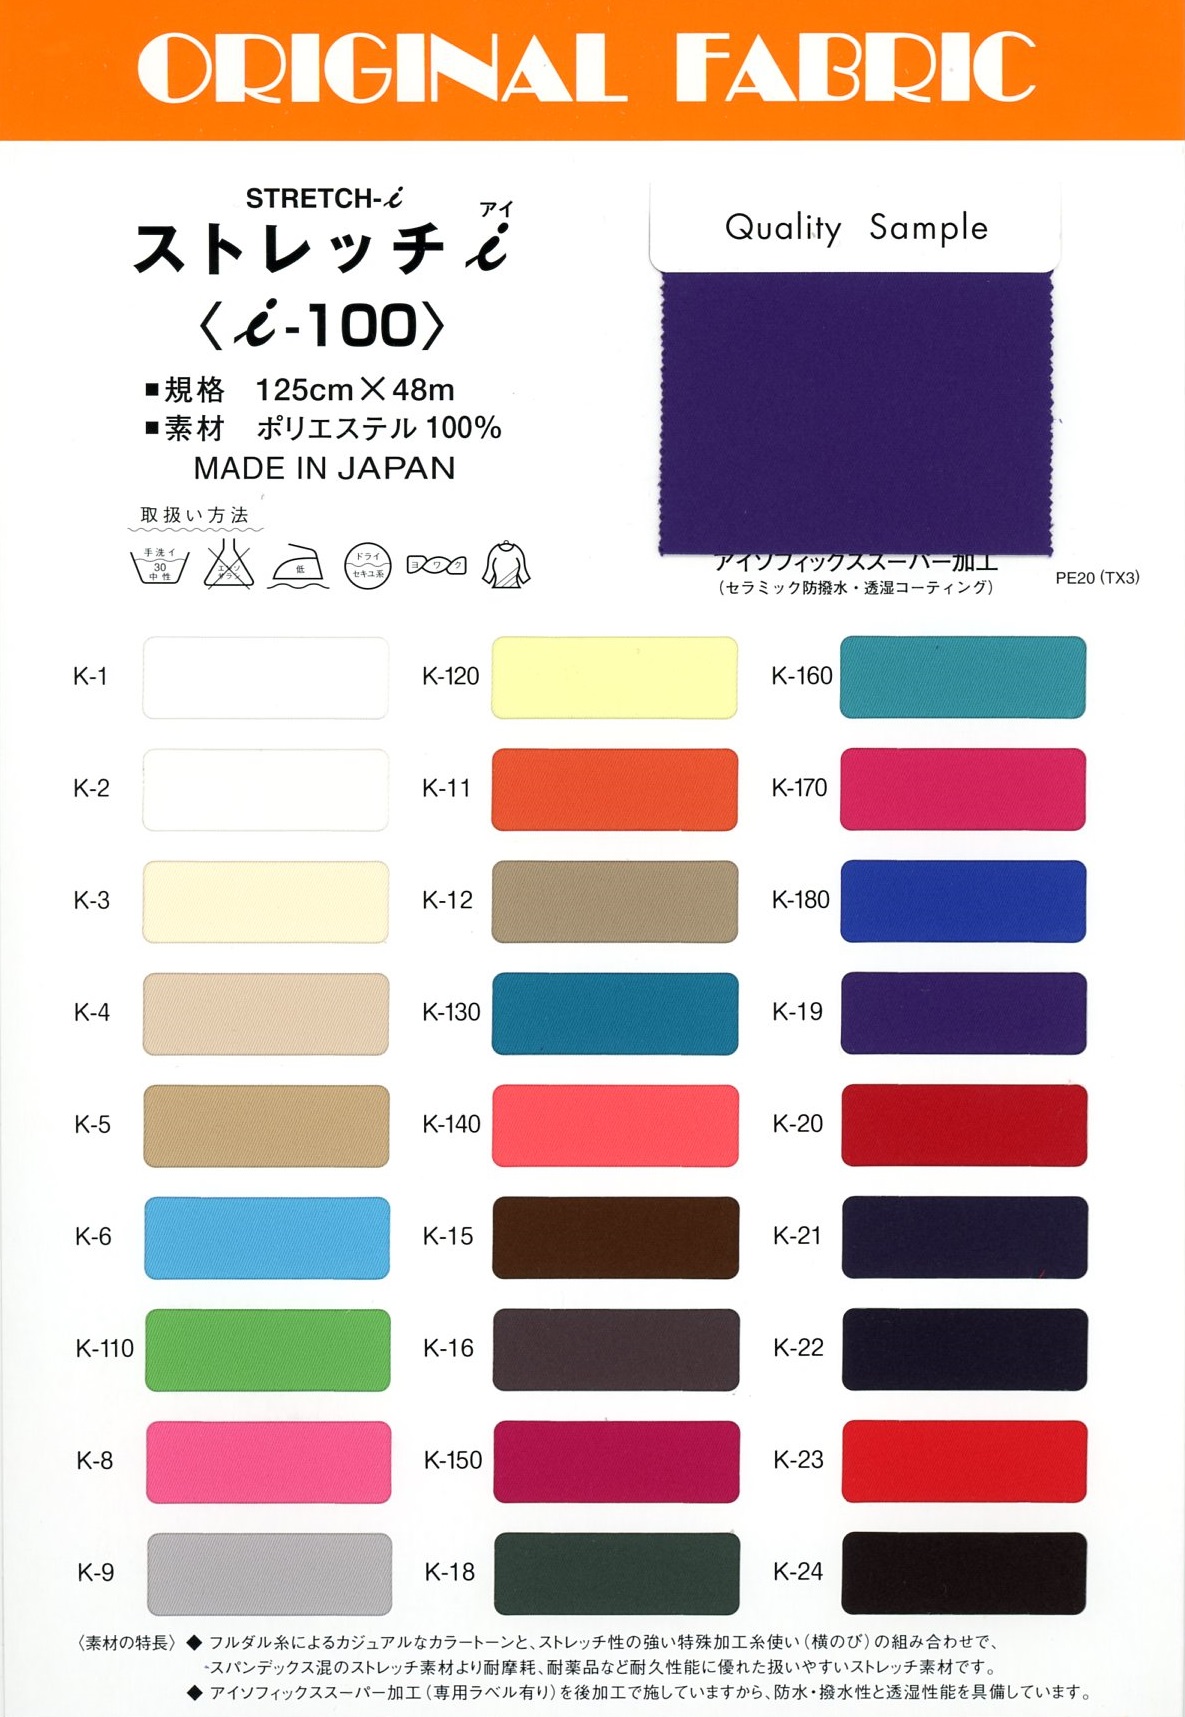 I-100 Étirement I[Fabrication De Textile] Masuda